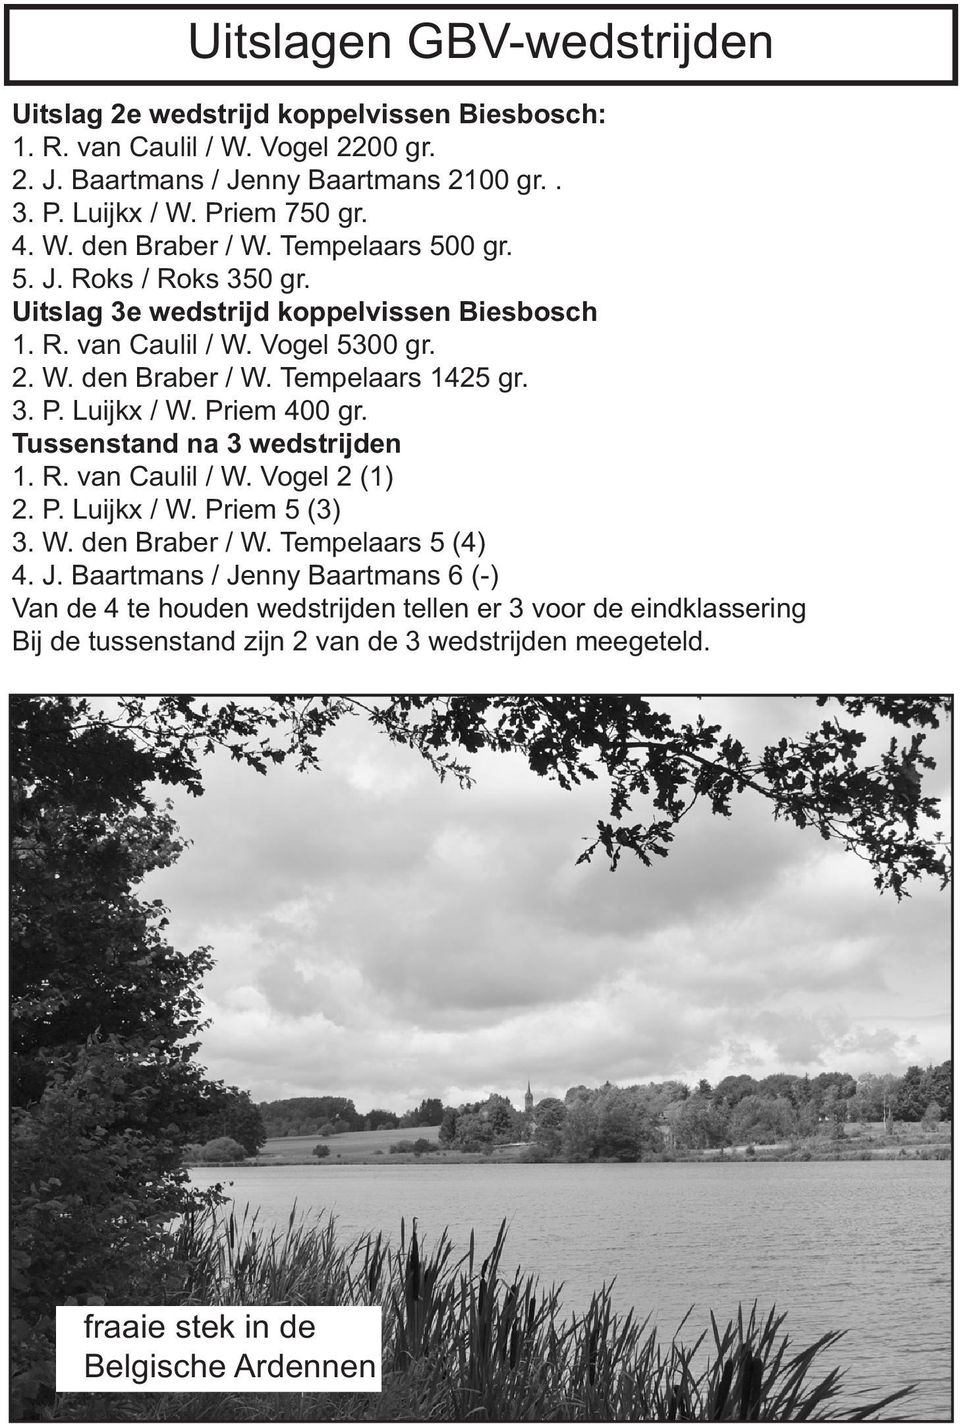 3. P. Luijkx / W. Priem 400 gr. Tussenstand na 3 wedstrijden 1. R. van Caulil / W. Vogel 2 (1) 2. P. Luijkx / W. Priem 5 (3) 3. W. den Braber / W. Tempelaars 5 (4) 4. J.